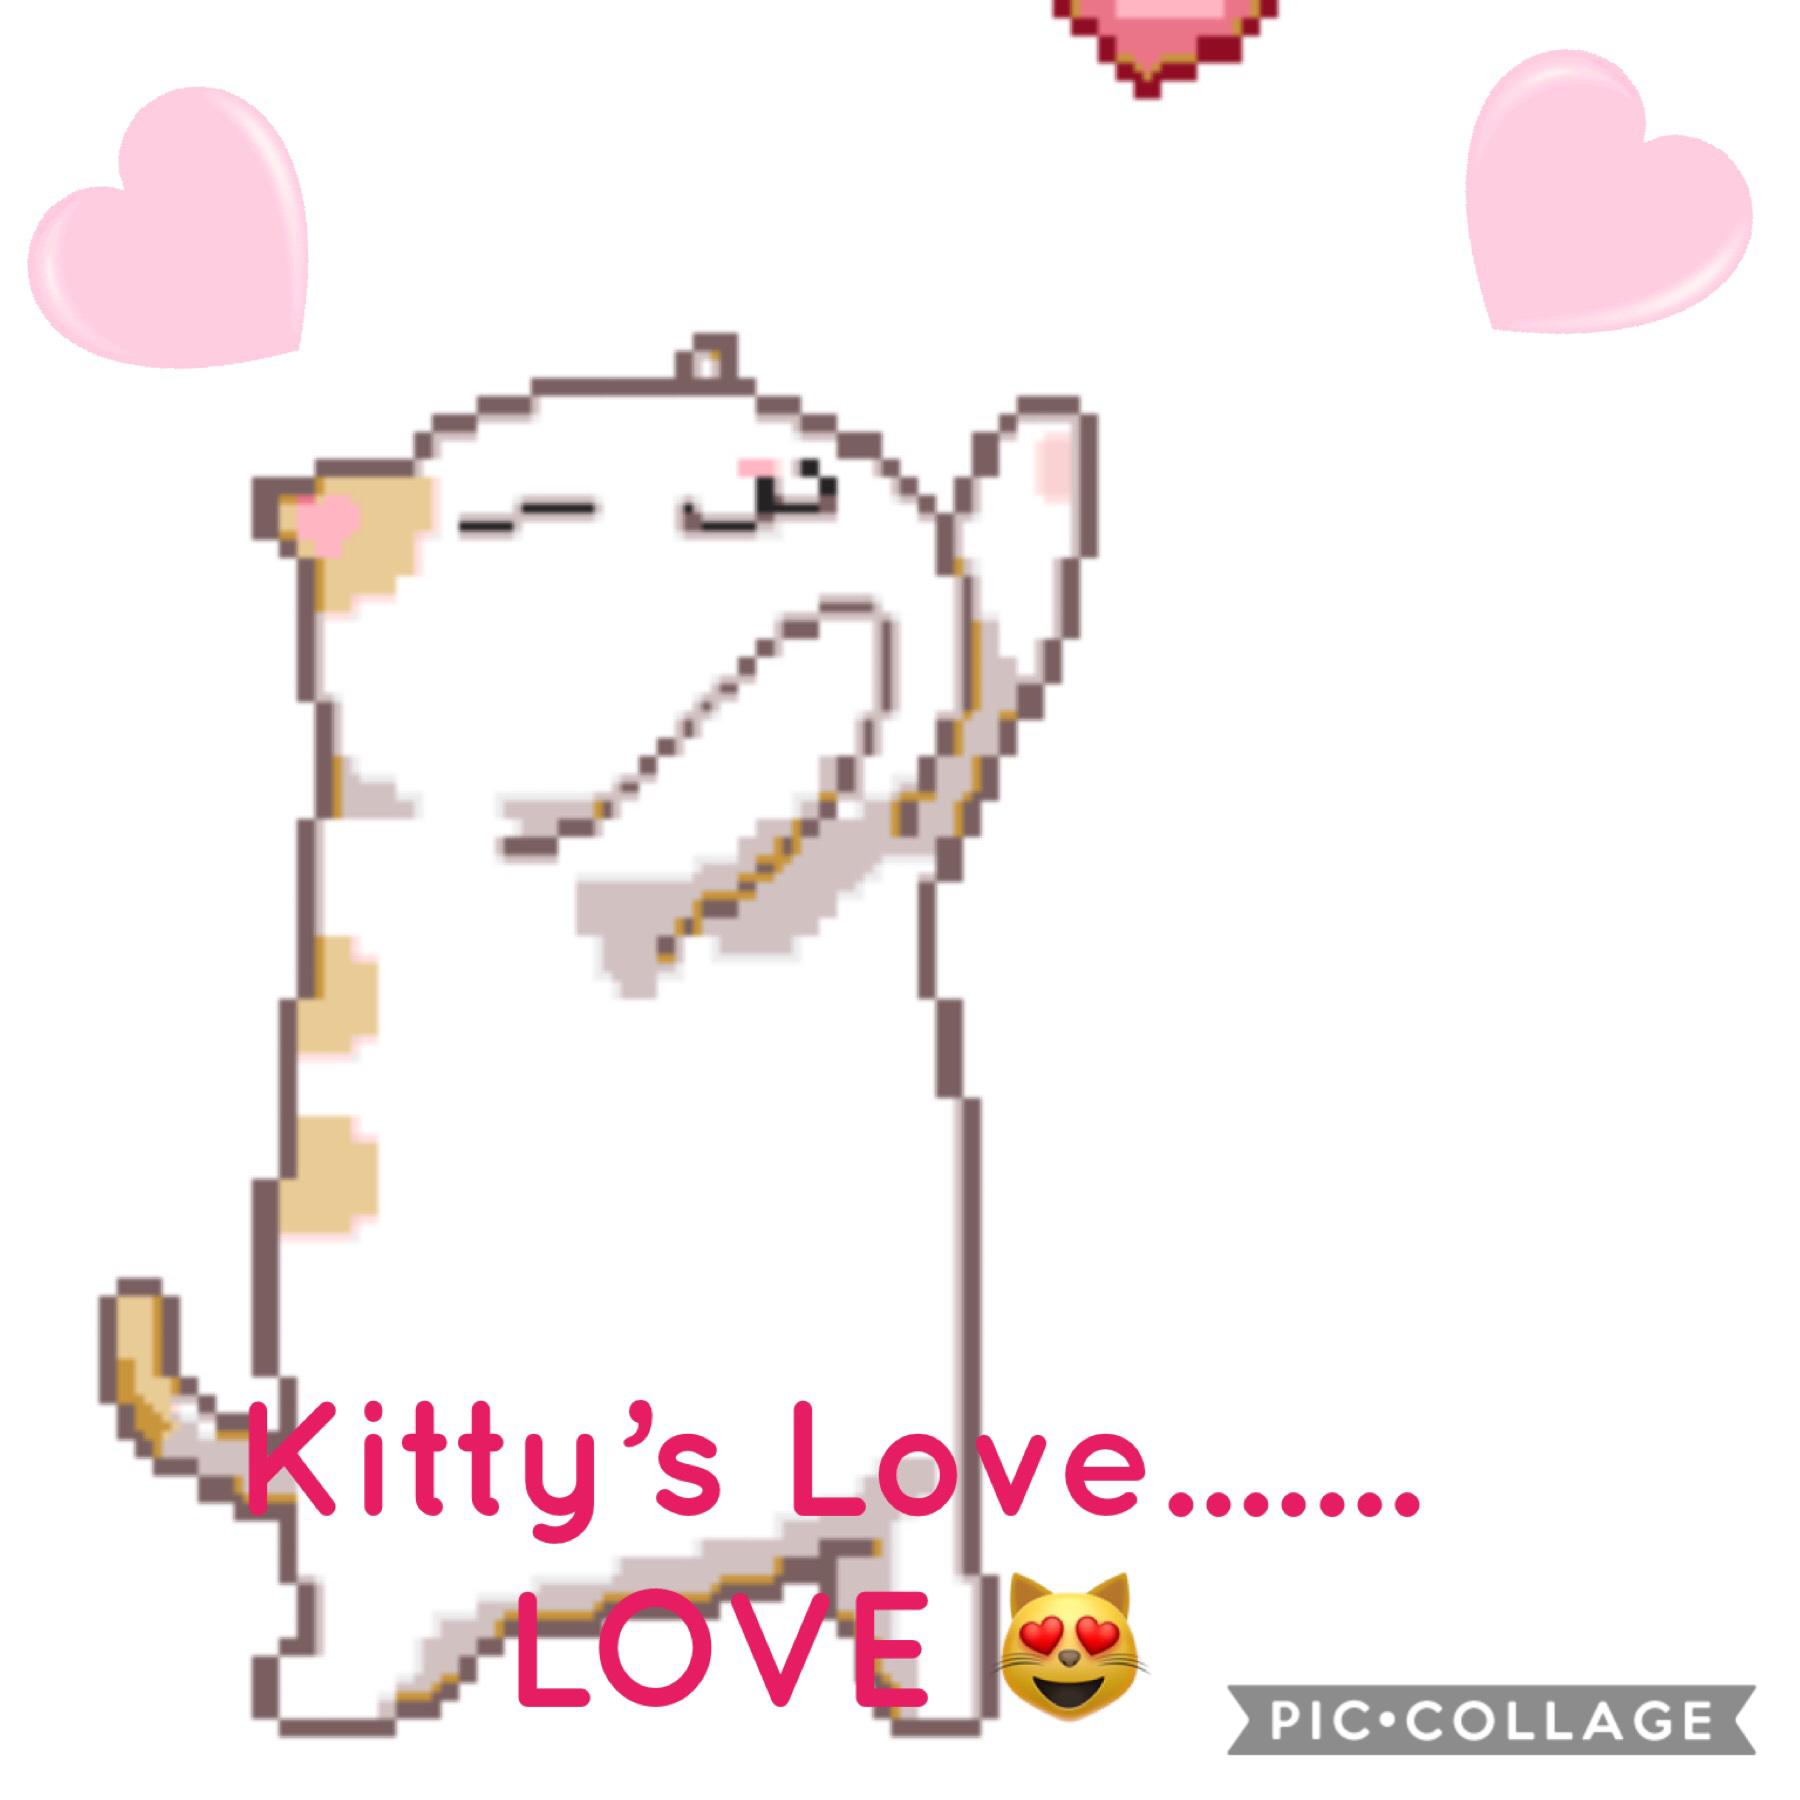 # KITTY LOVE 💕 